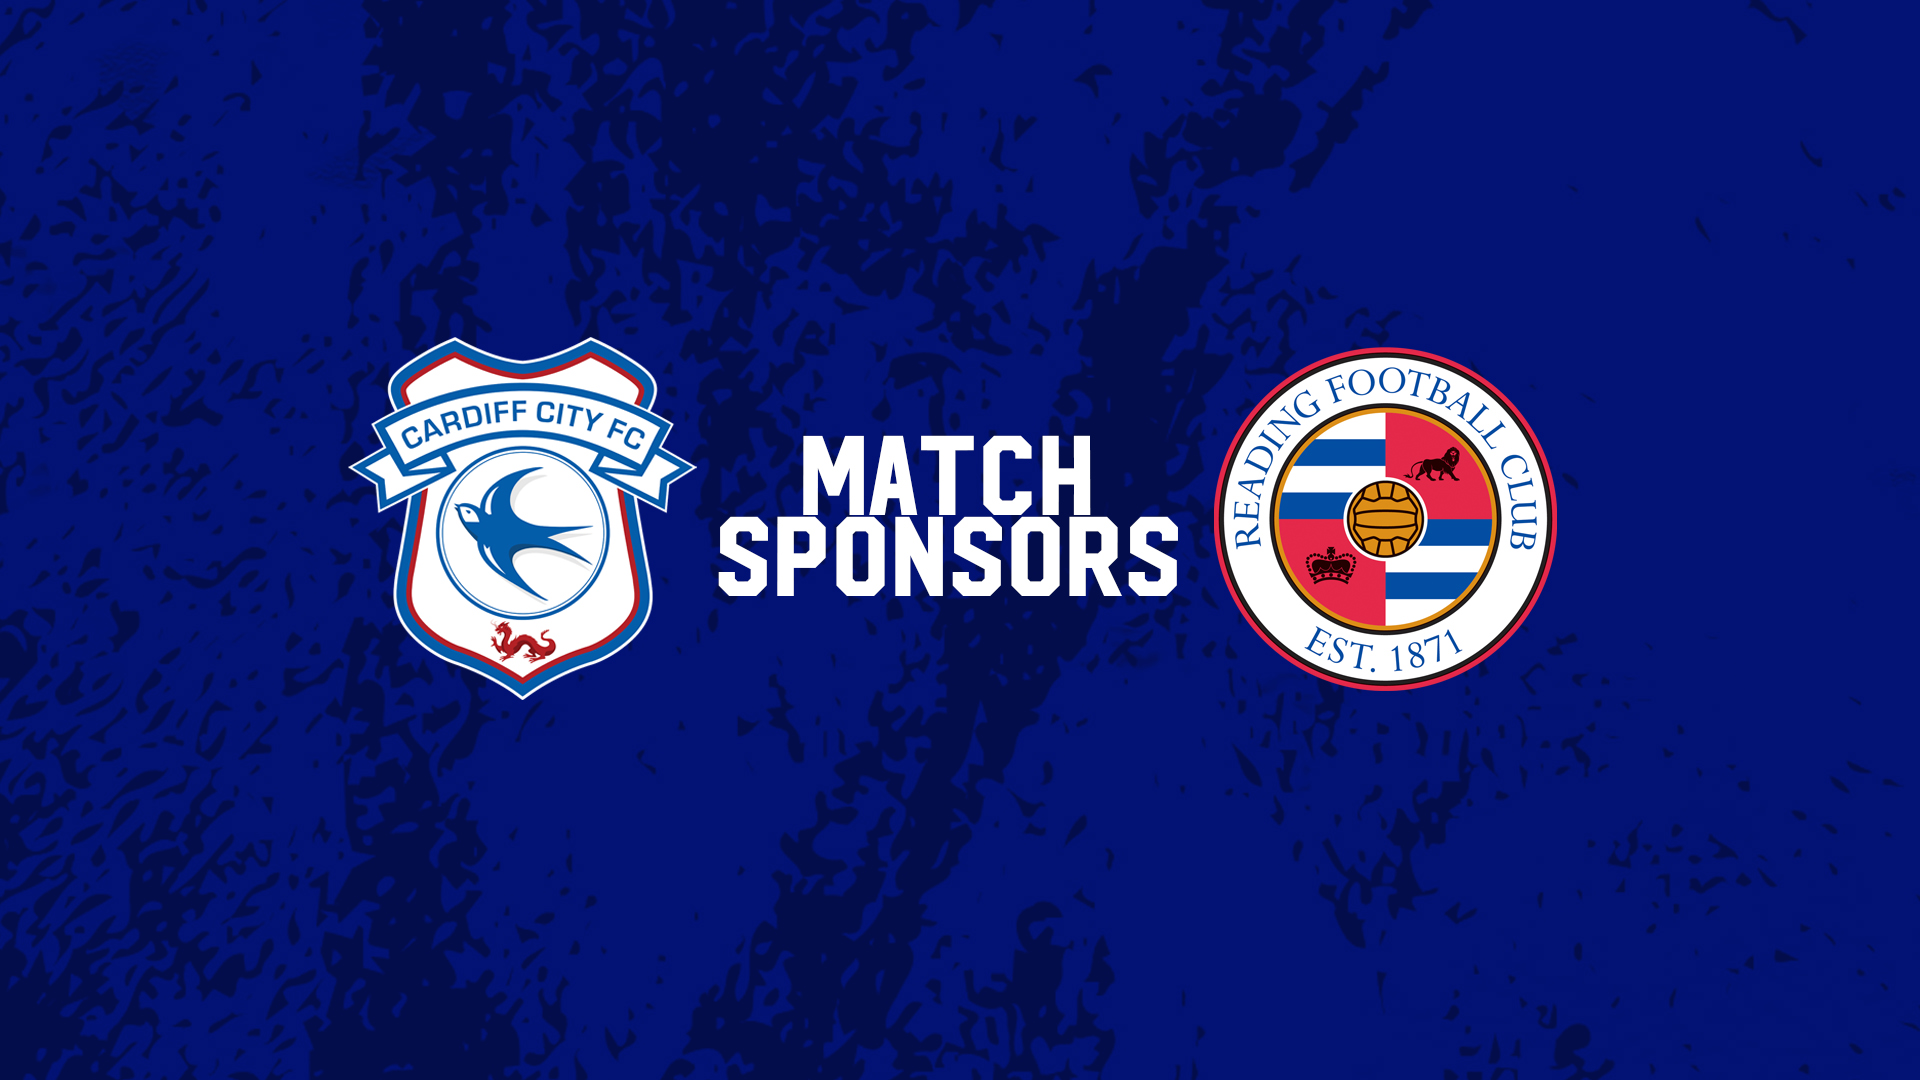 Match Sponsors | Cardiff City vs. Reading